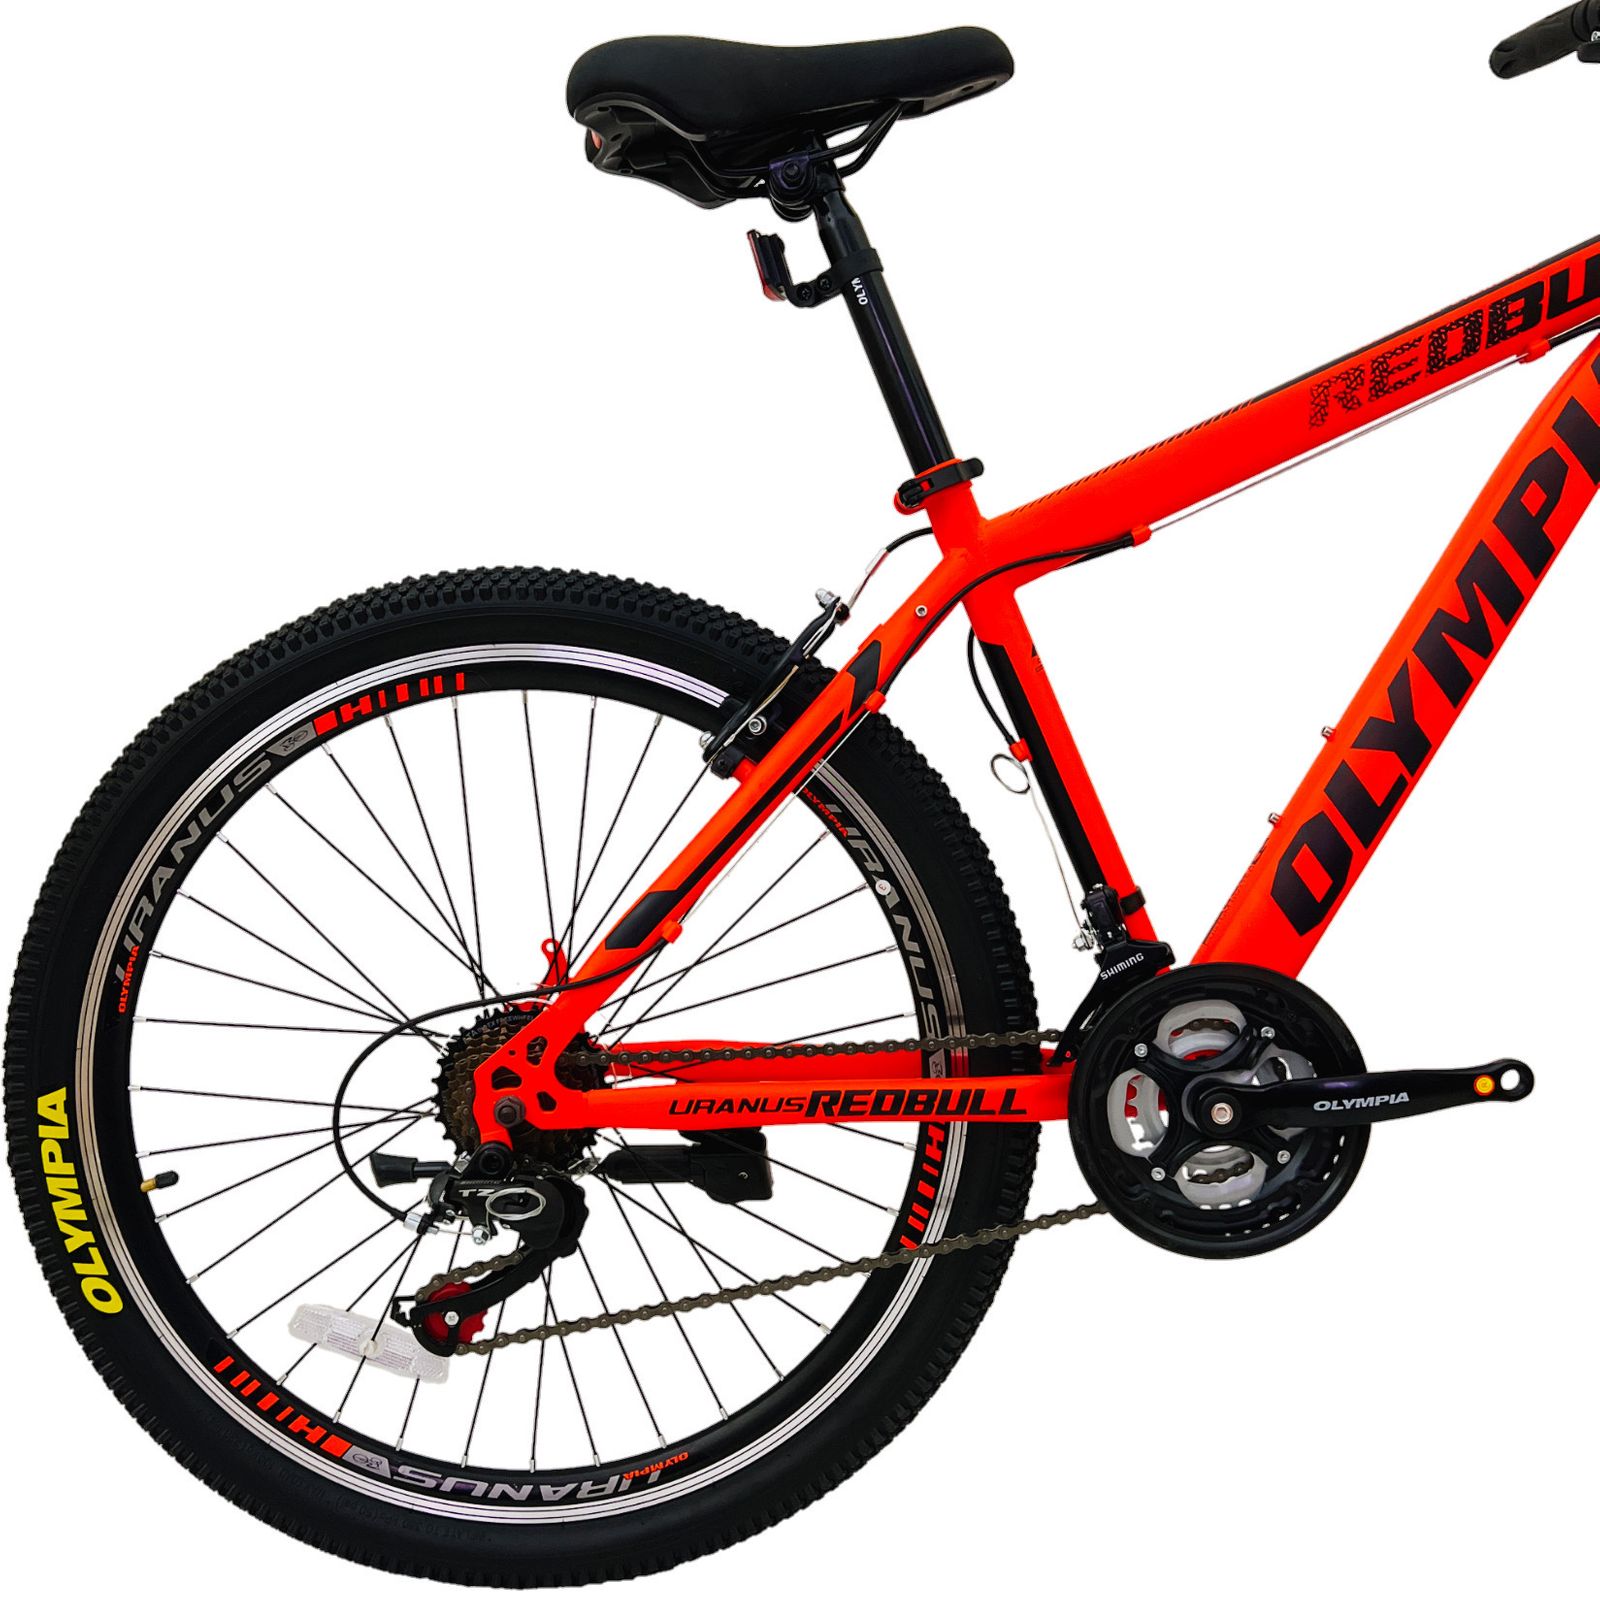 دوچرخه کوهستان المپیا مدل REDBULL کد 4 سایز 26 -  - 4